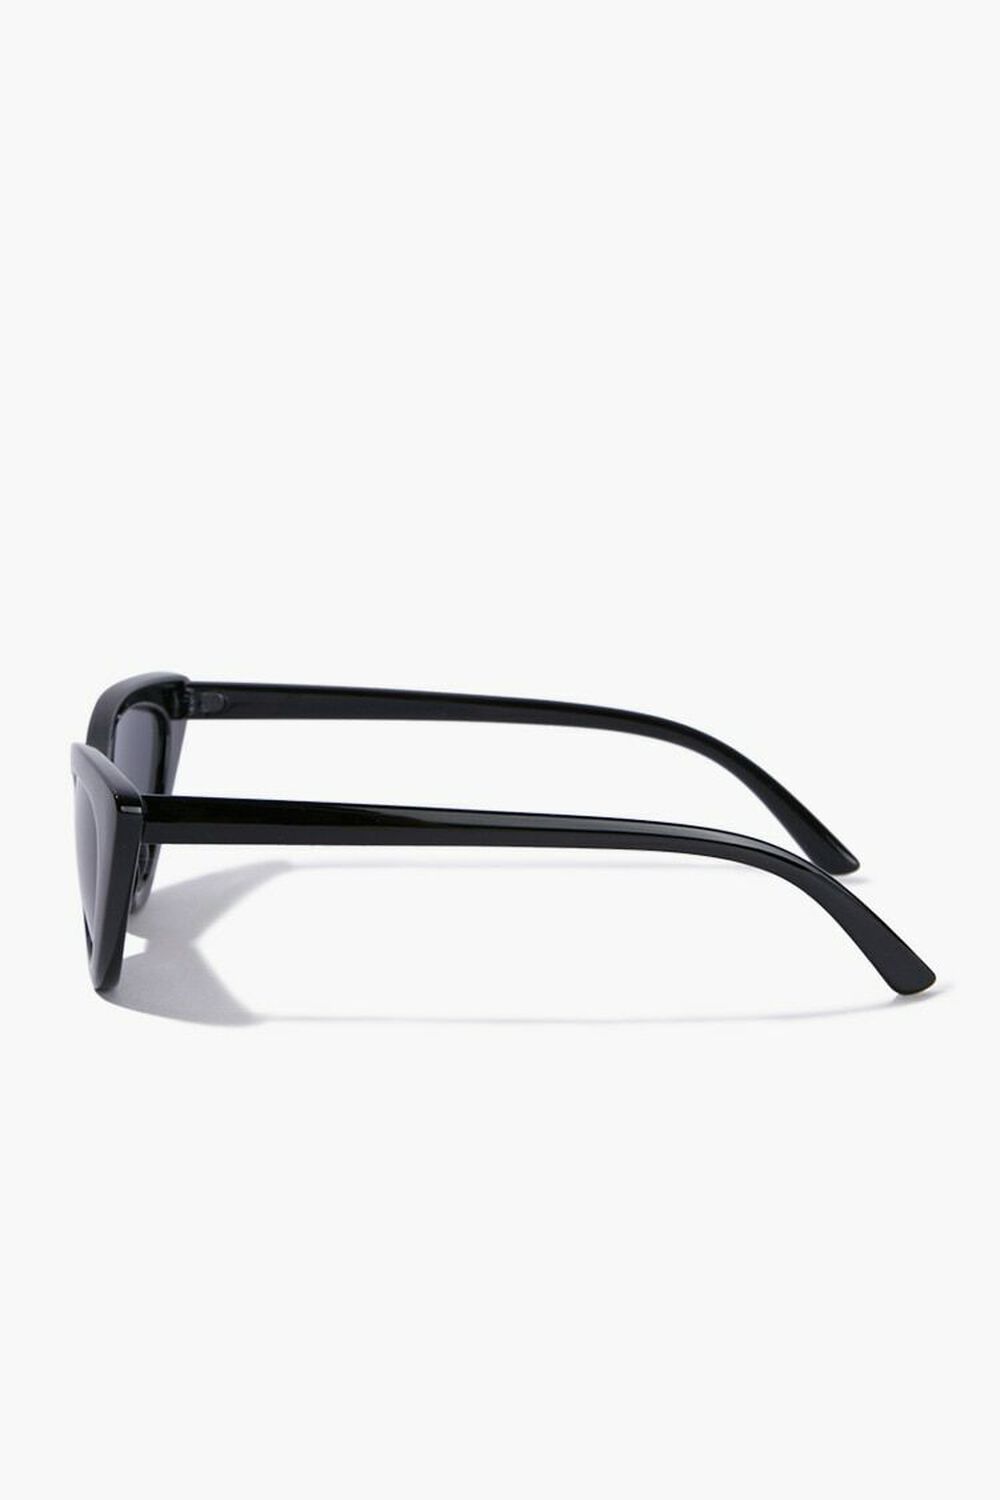 BLACK Skinny Cat-Eye Sunglasses, image 2